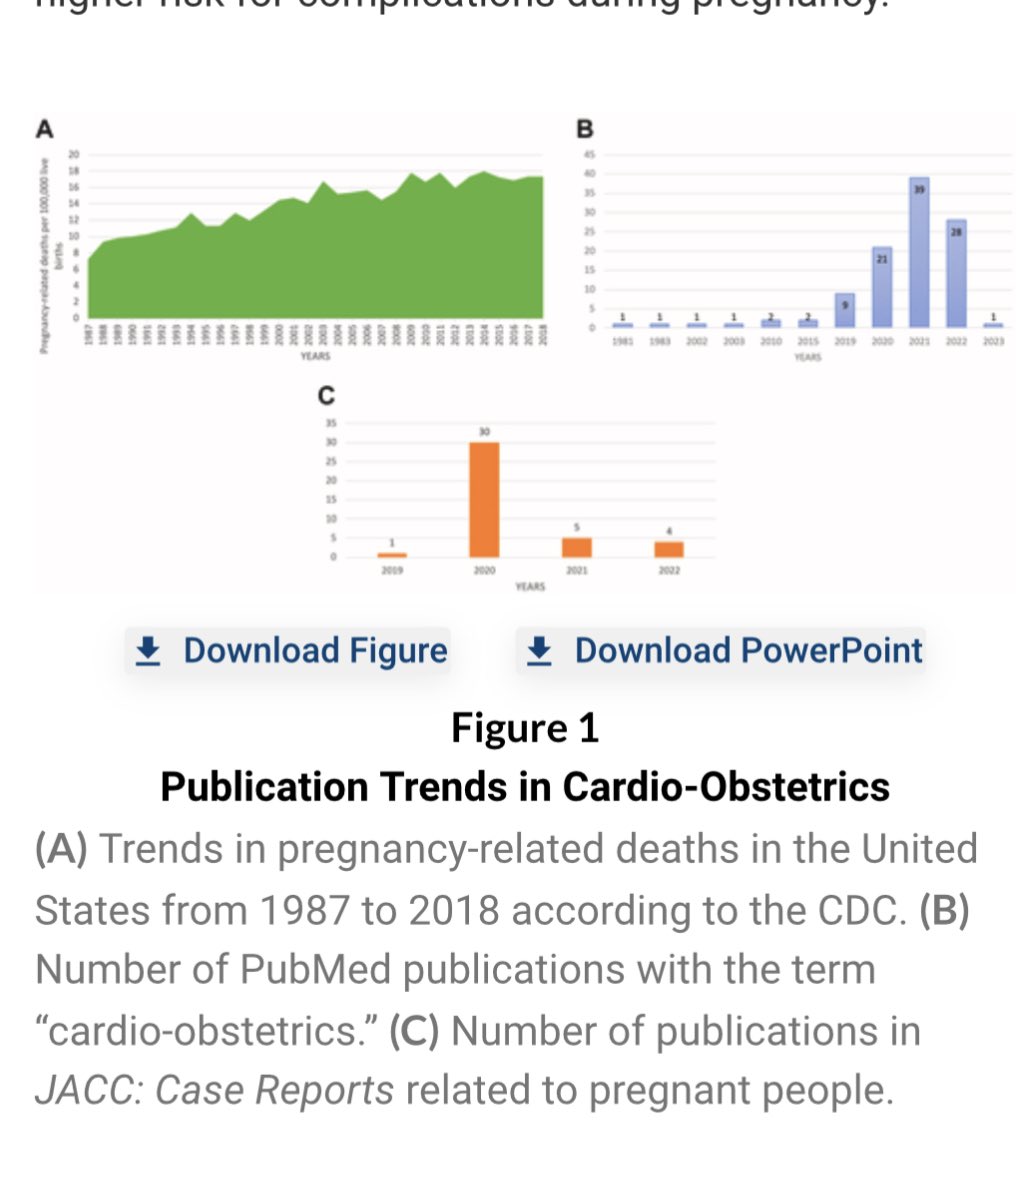 #Pregnant #woman & the #Cardiologist -how to navigate #CVD management during #pregnancy 👉 bit.ly/42Kxre4 #women #JACCCaseReports #CardioObstetrics @EstefaniaOS @SabrinaIslamMD @MartinGKeaneMD @JGrapsa @ErinMichos @DrMarthaGulati @JACCJournals @mmamas1973 @mirvatalasnag